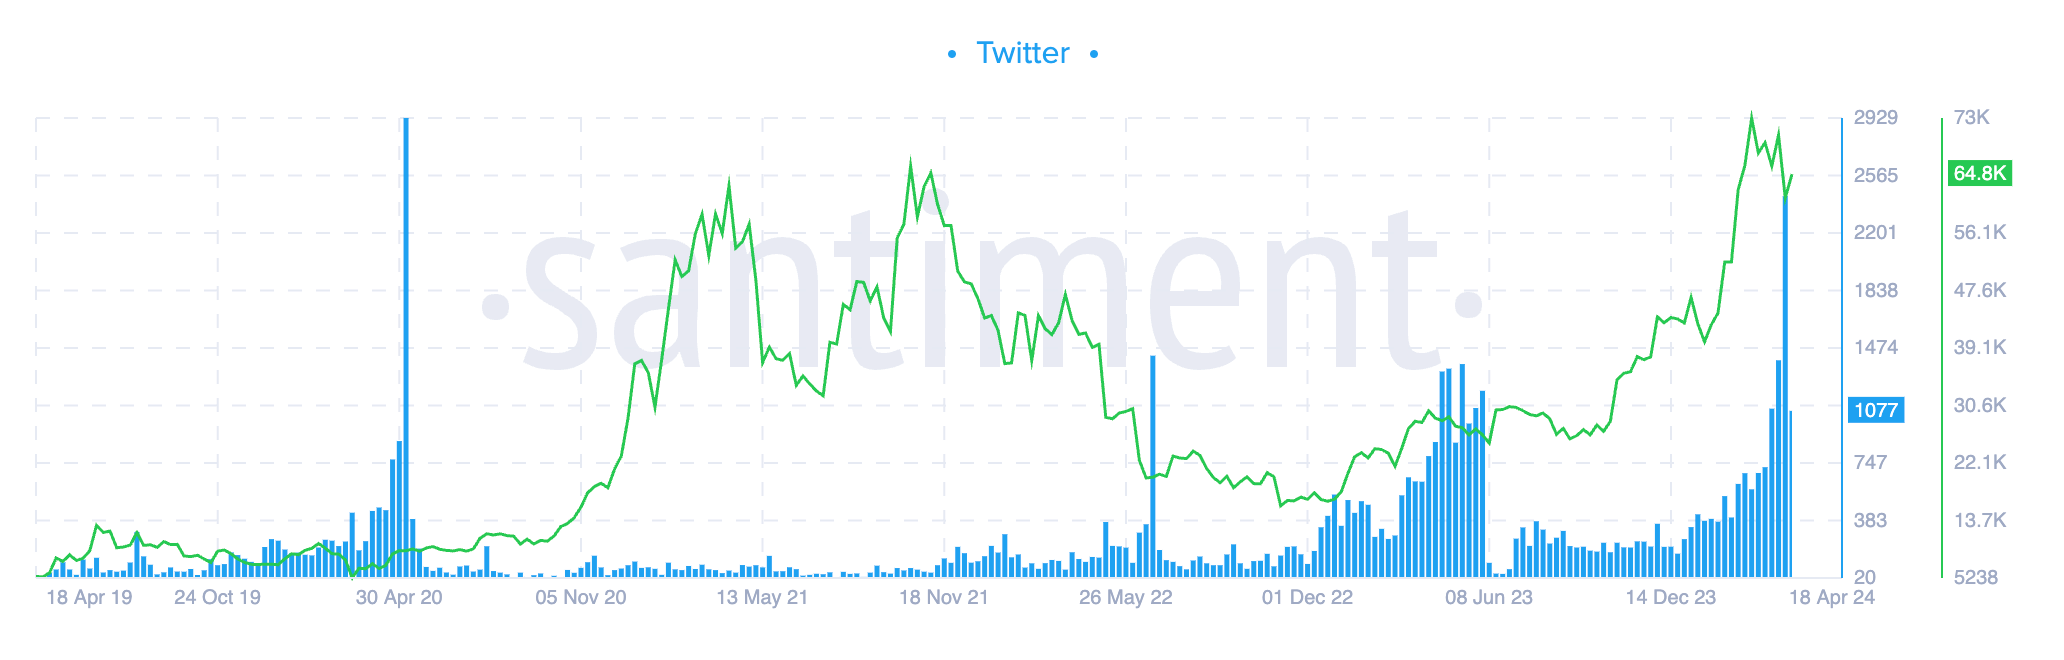 Twitter interest halved due to Bitcoin (Santiment)